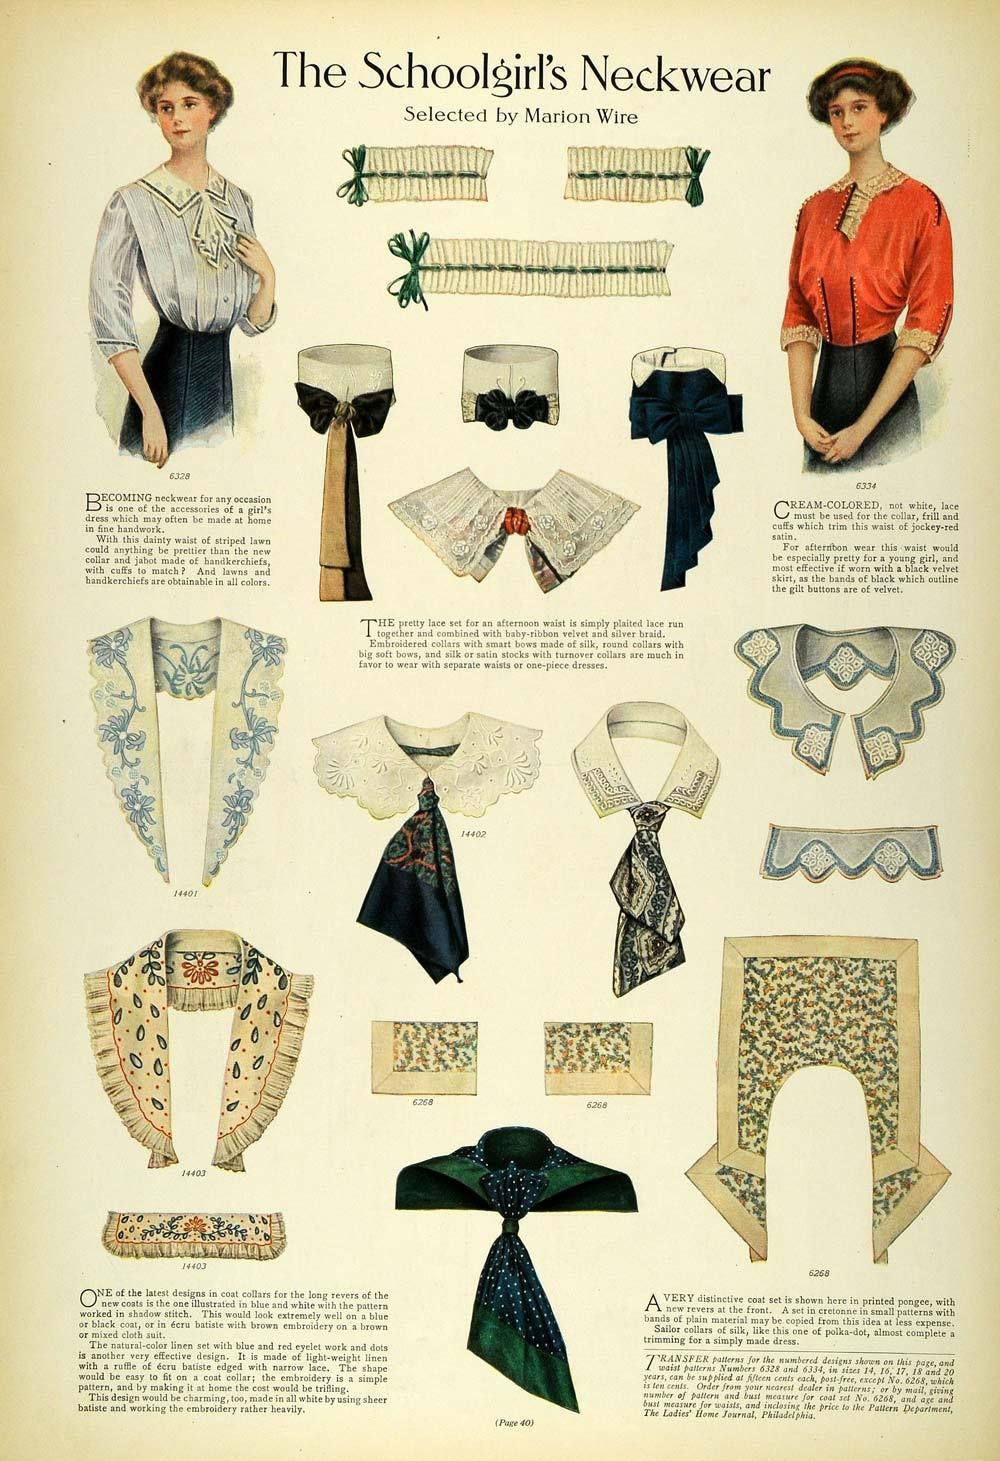 Edwardian neckwear